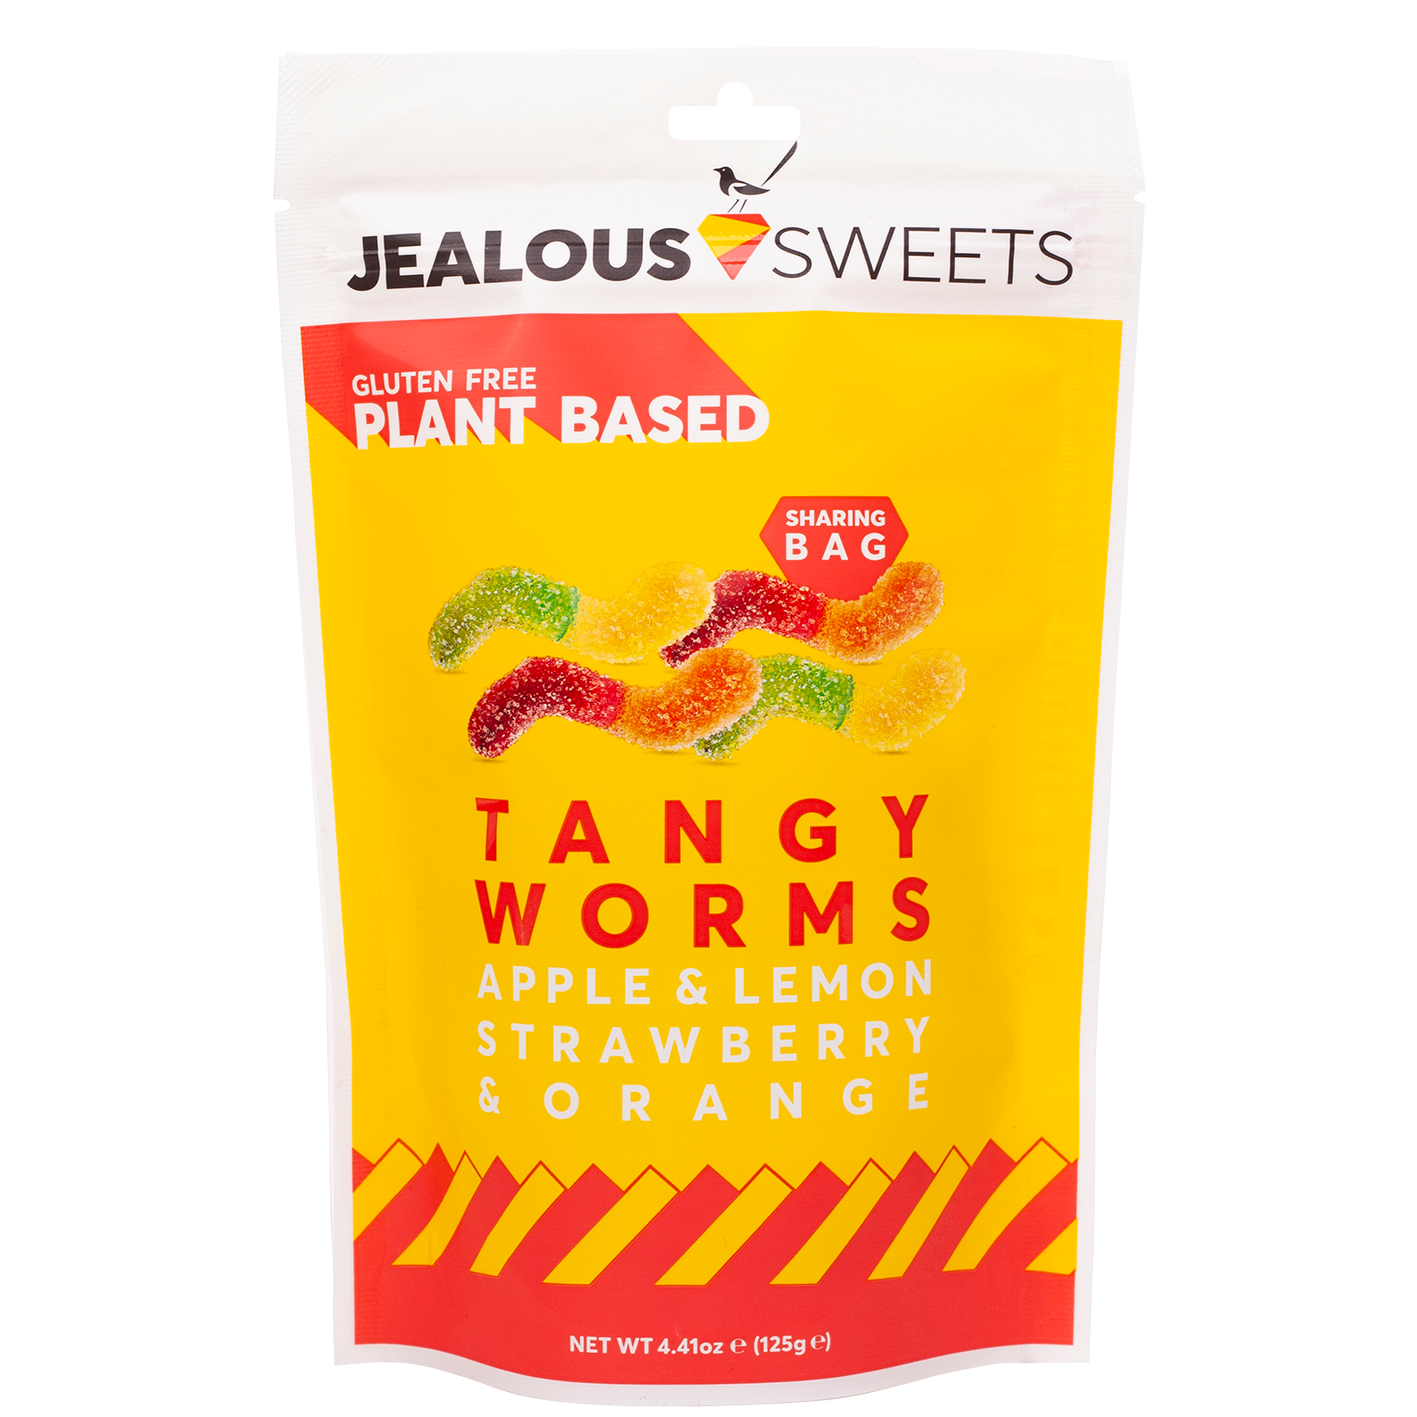 Jealous Sweets Tangy Worms 7 units per case 4.5 oz